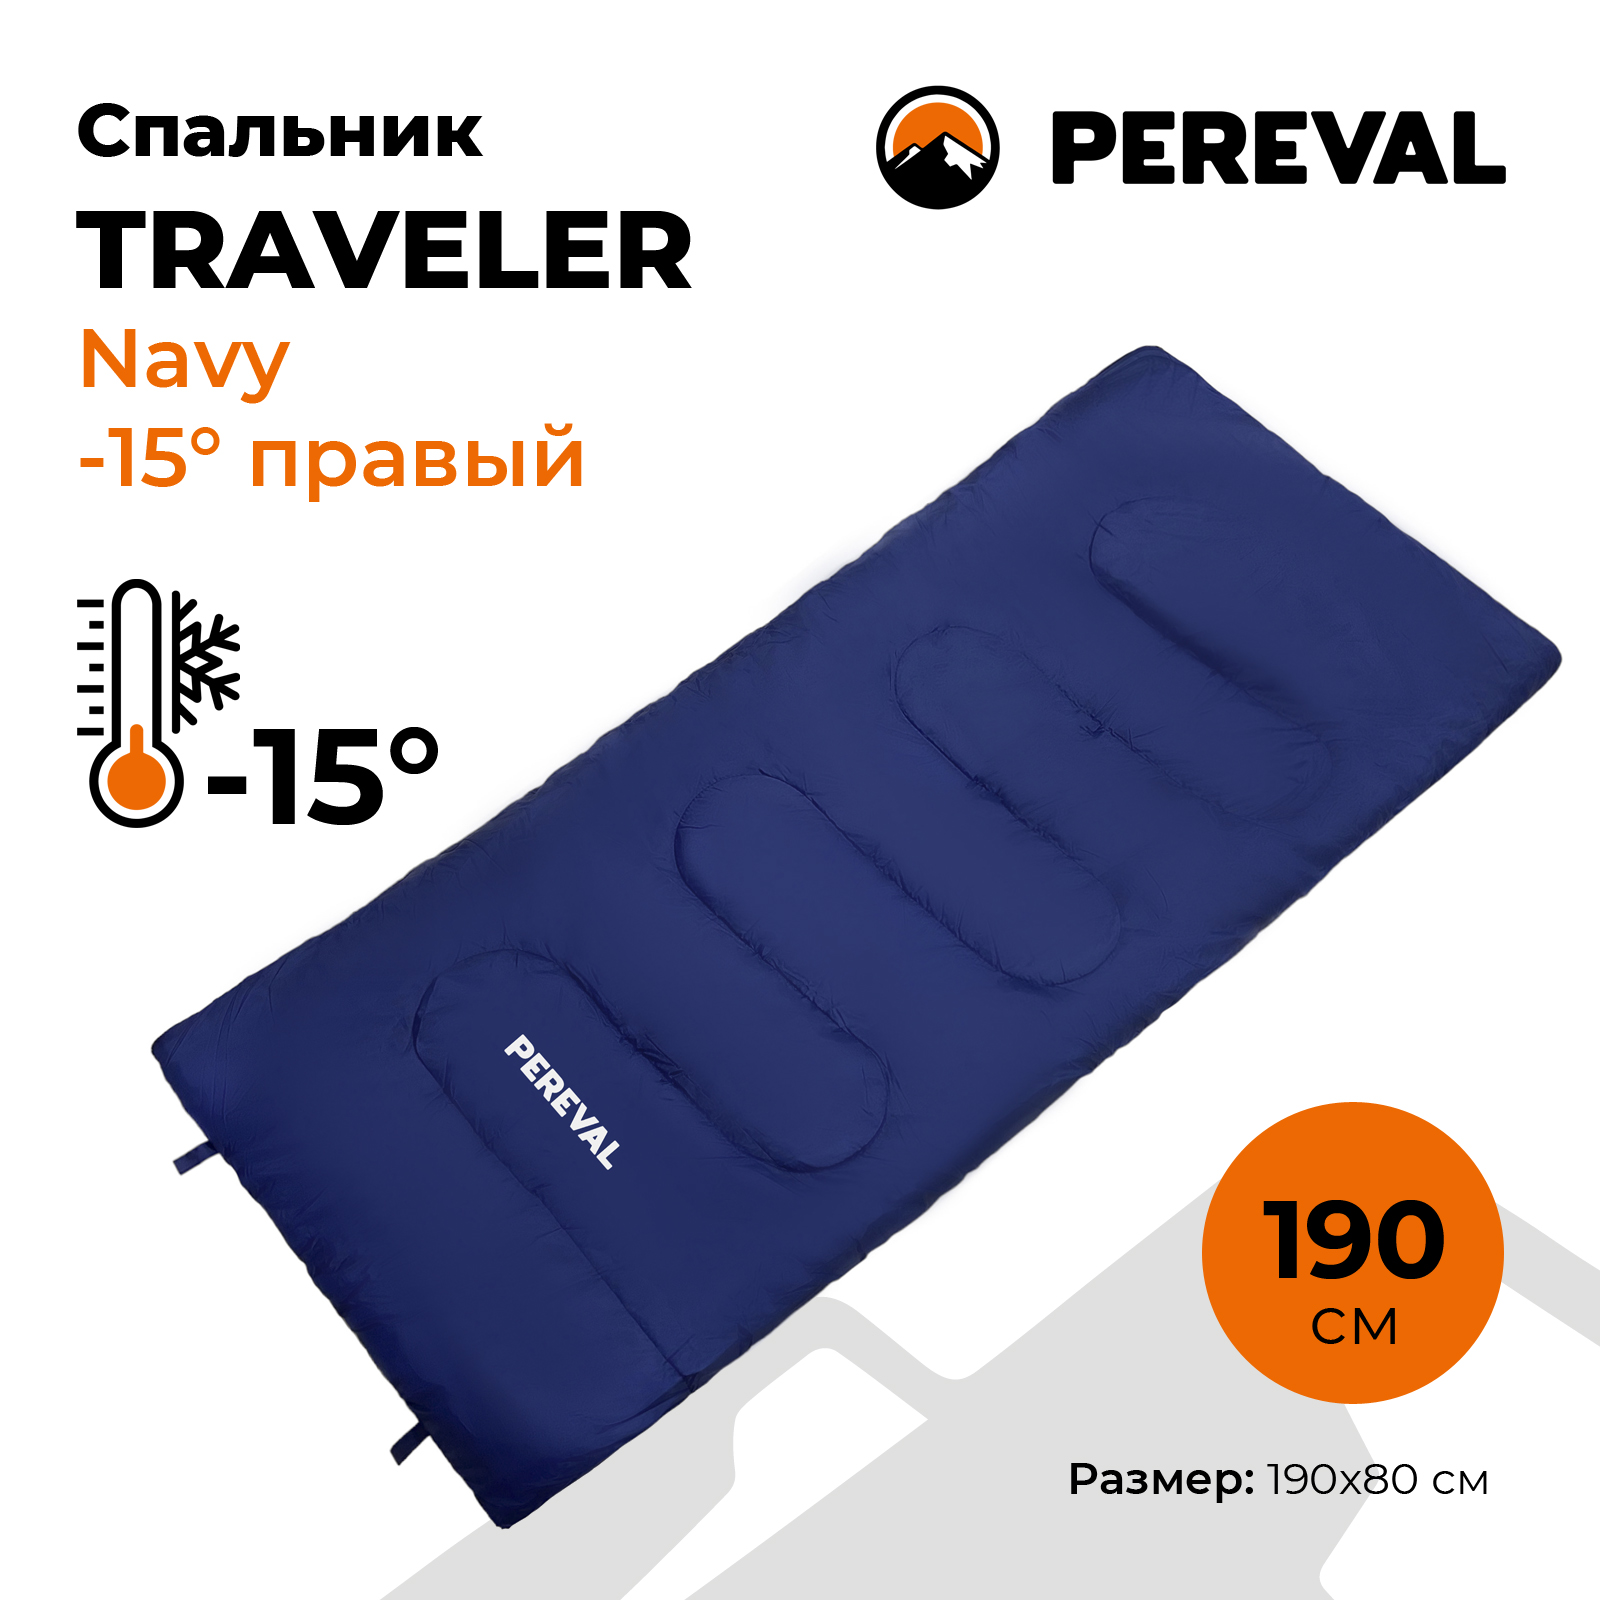 Спальник Pereval Traveler Navy -15° правый - фото 1